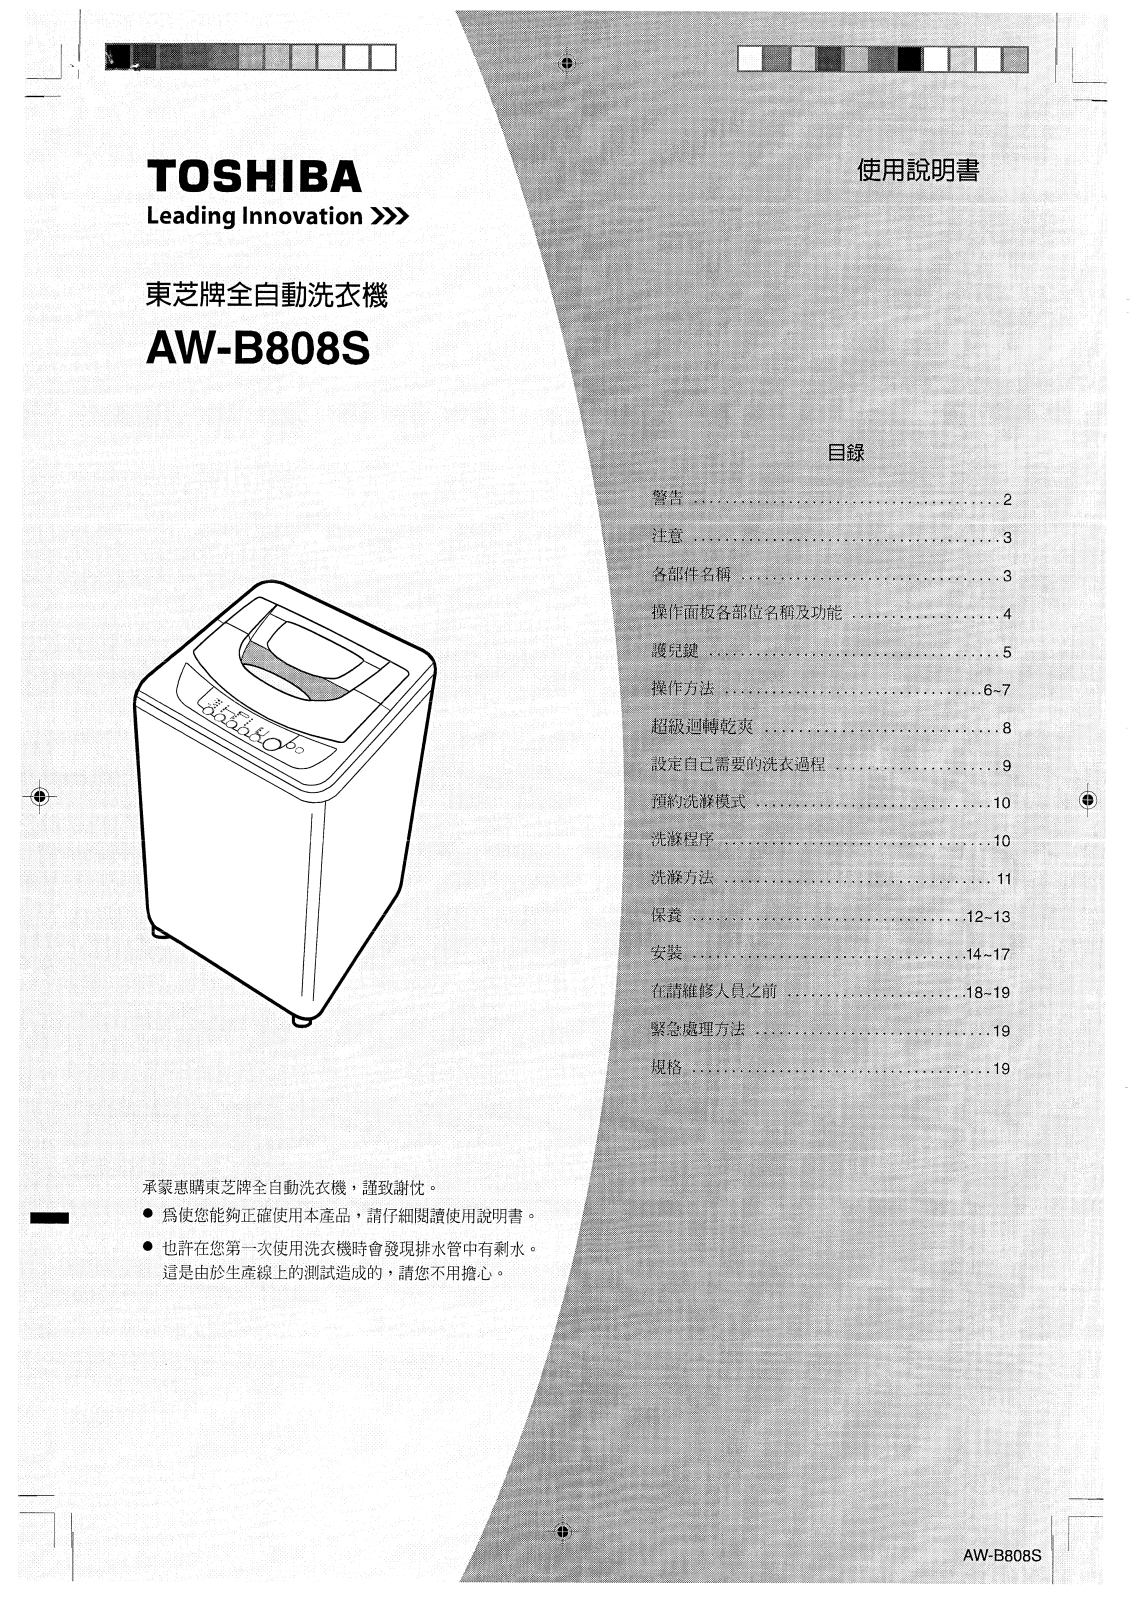 TOSHIBA AW-B808S User Manual